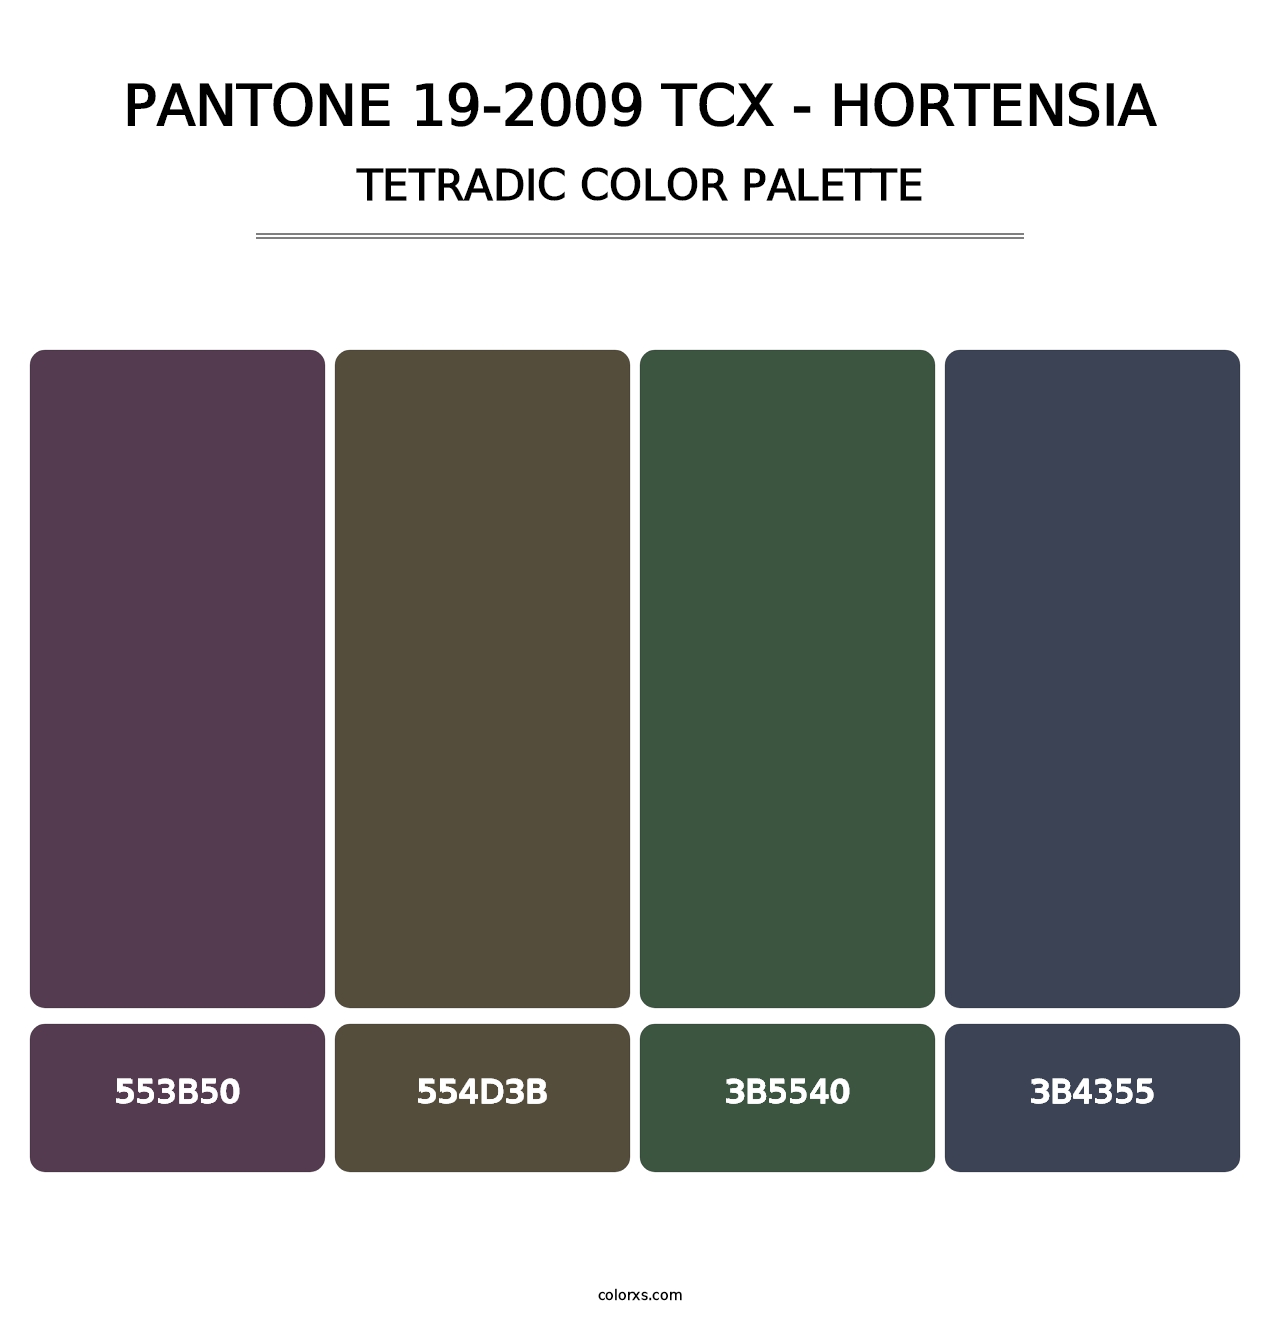 PANTONE 19-2009 TCX - Hortensia - Tetradic Color Palette